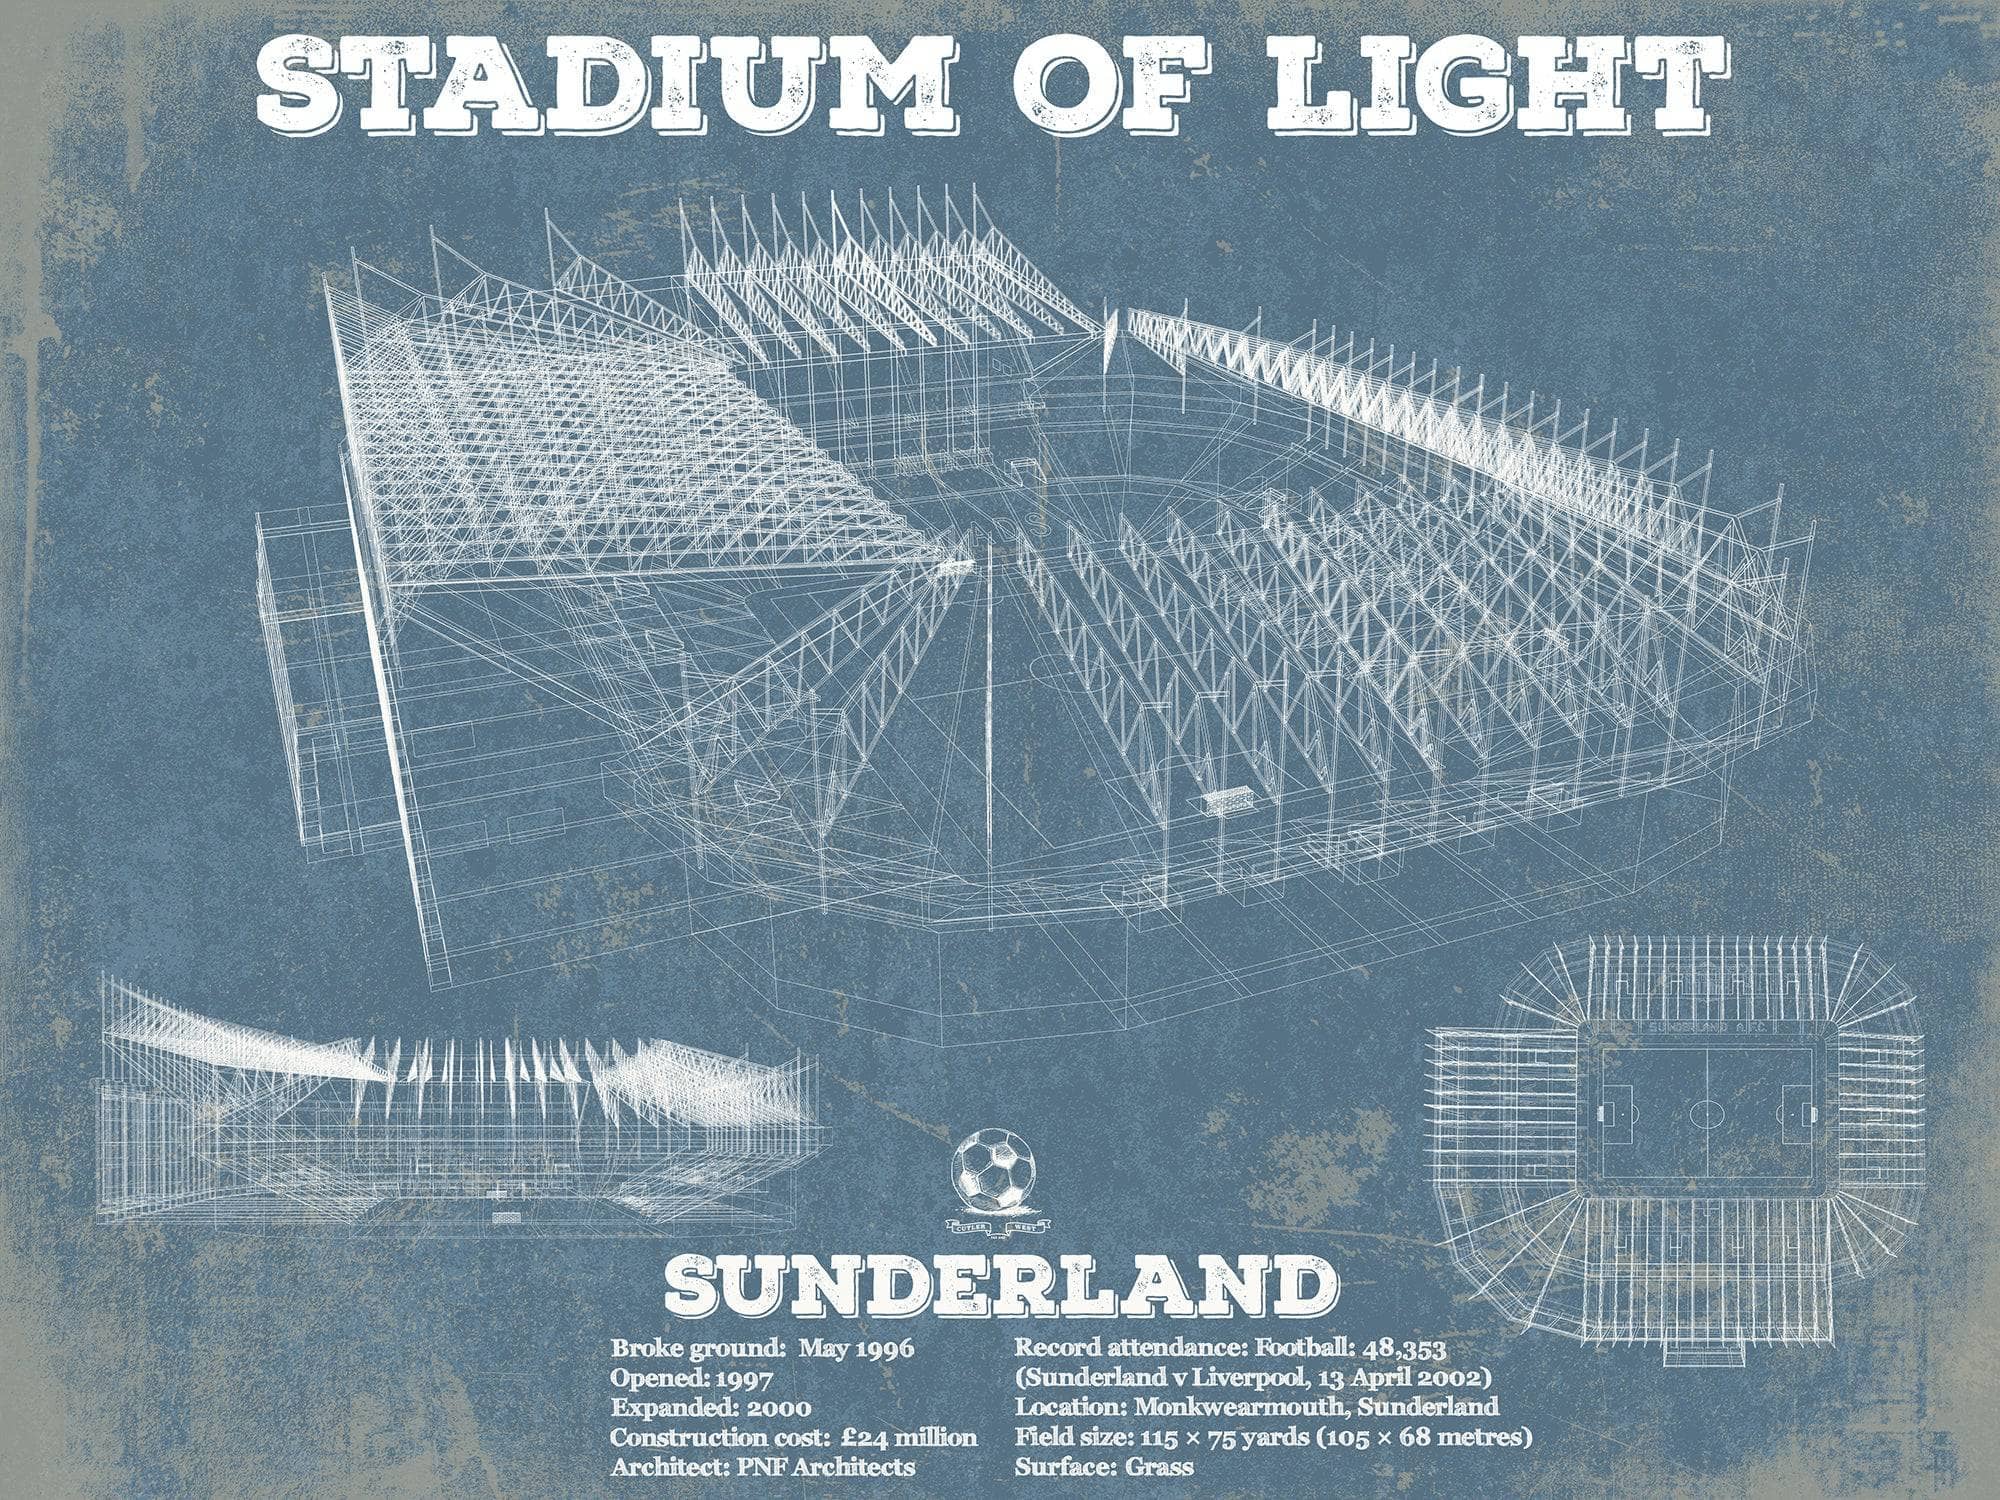 Cutler West Soccer Collection 14" x 11" / Unframed Sunderland AFC Stadium Of Light Soccer Print 845000162_31050